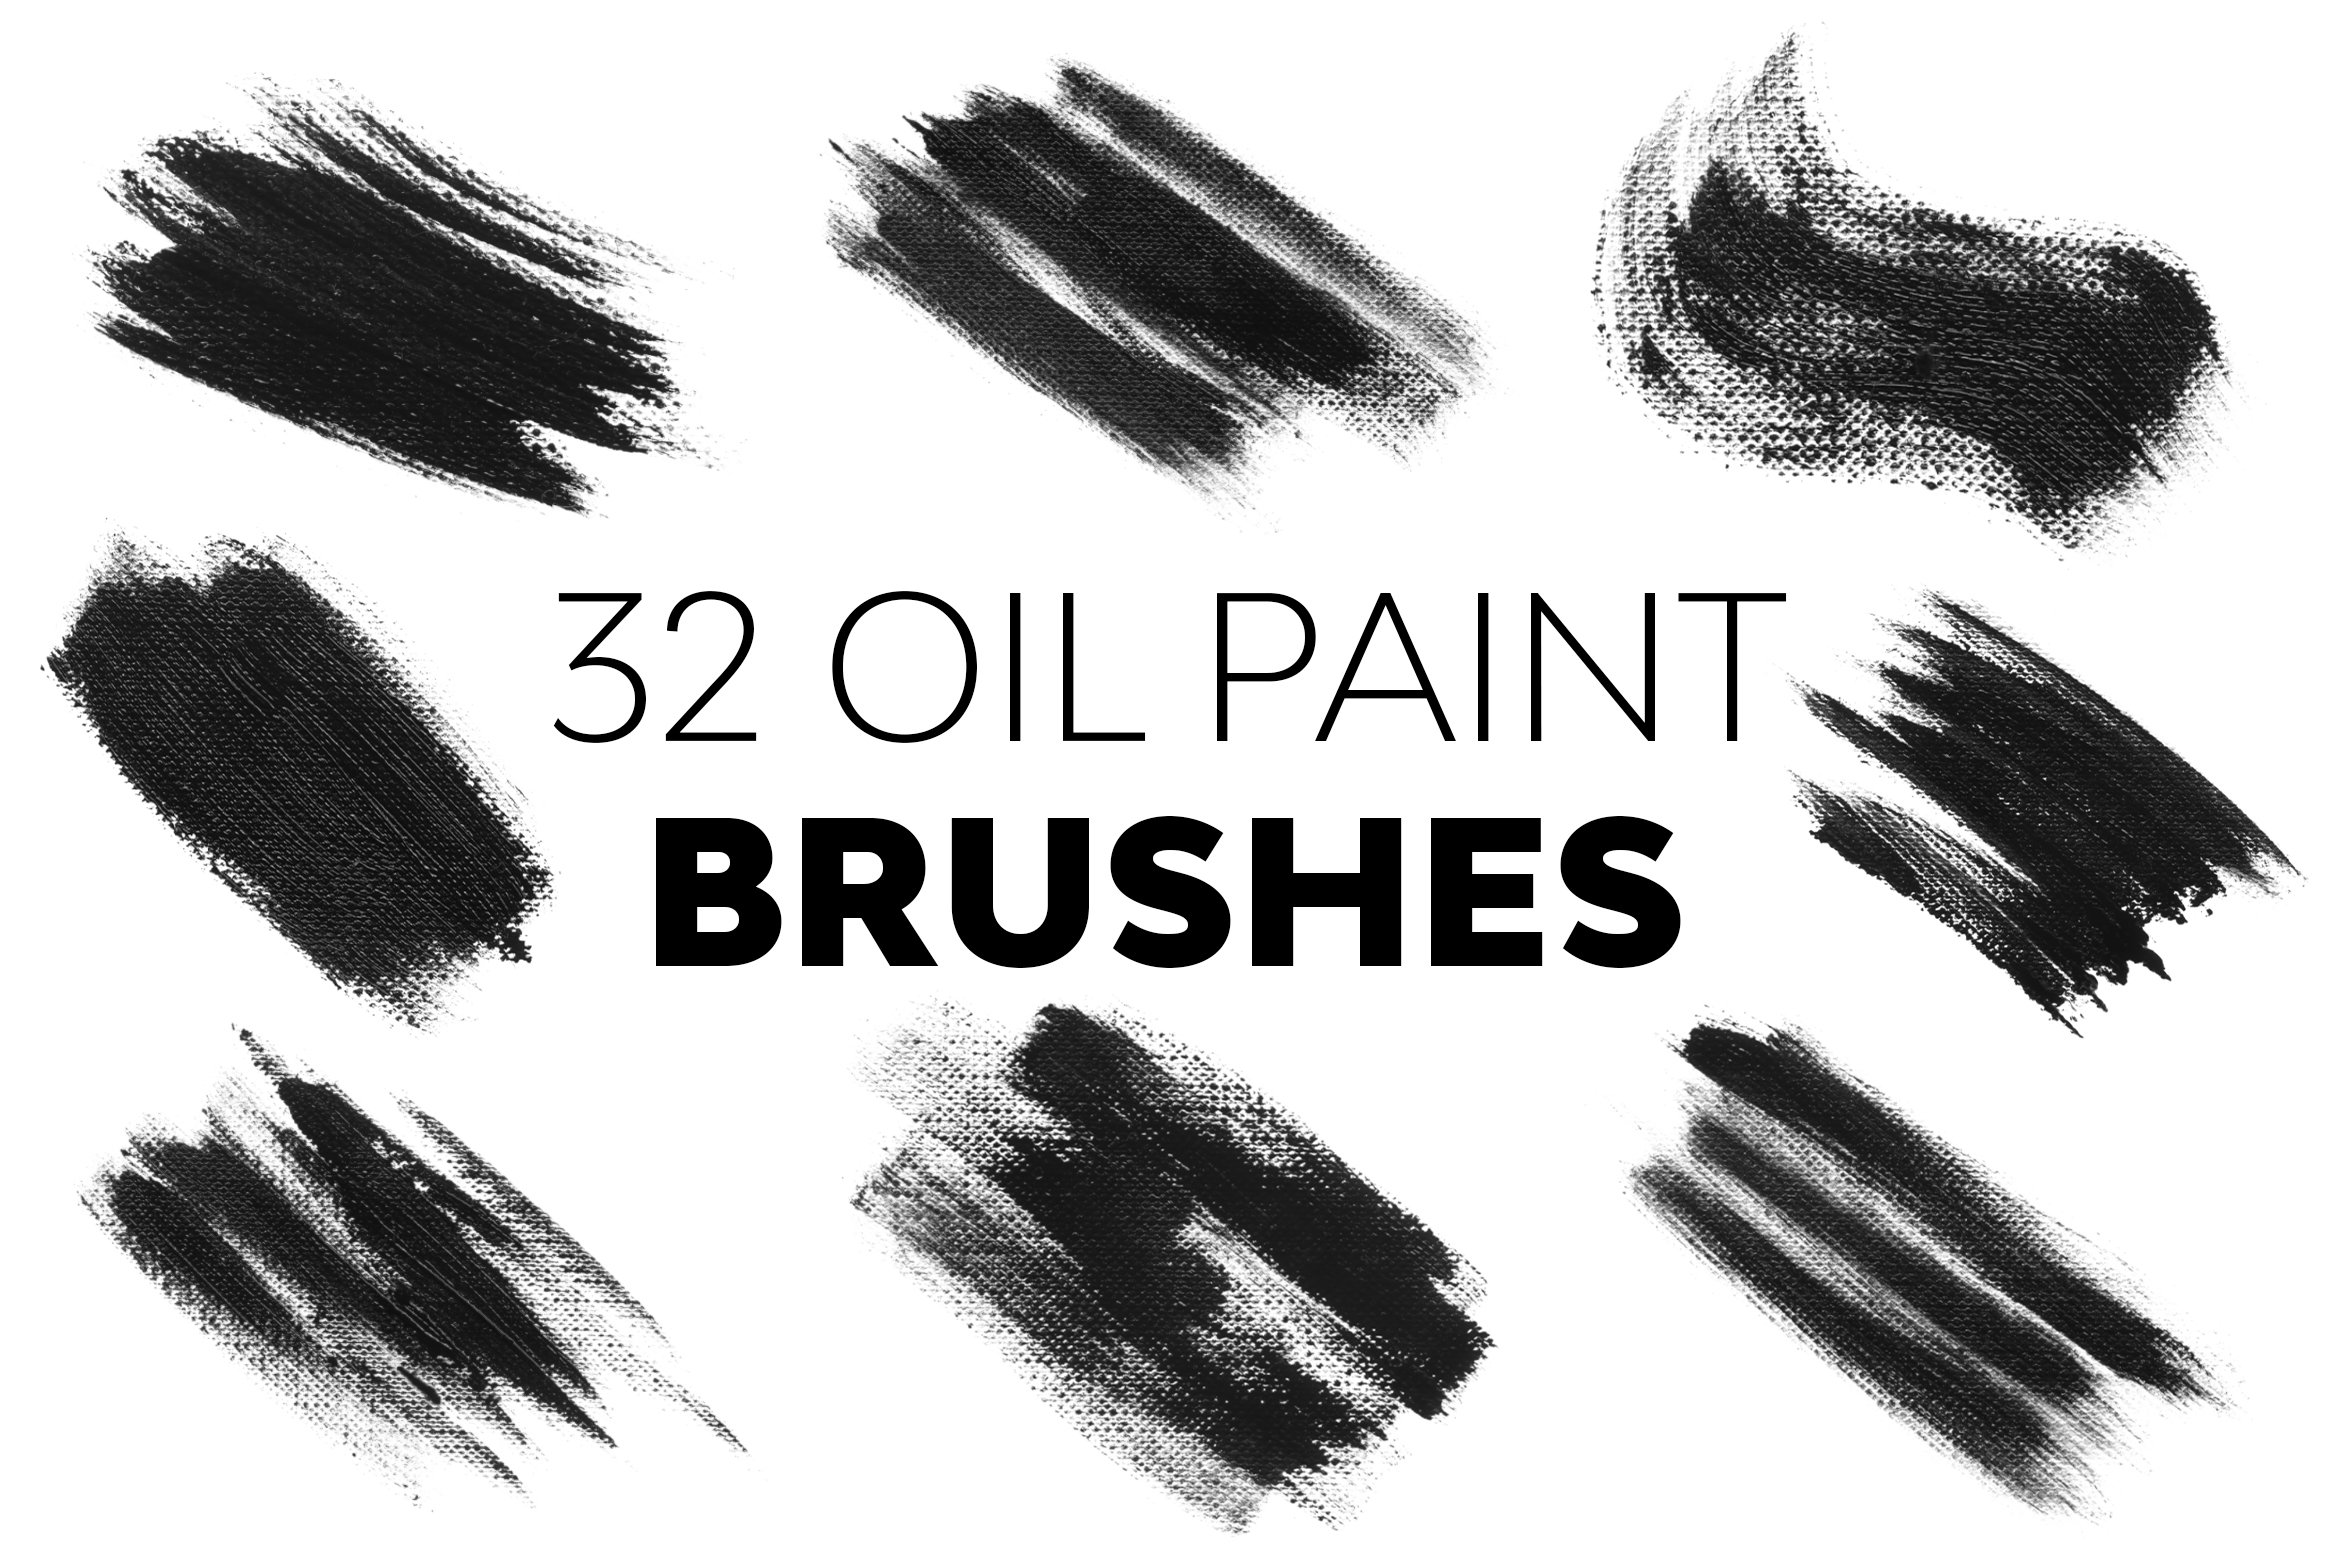 Oil Paint Brushescover image.